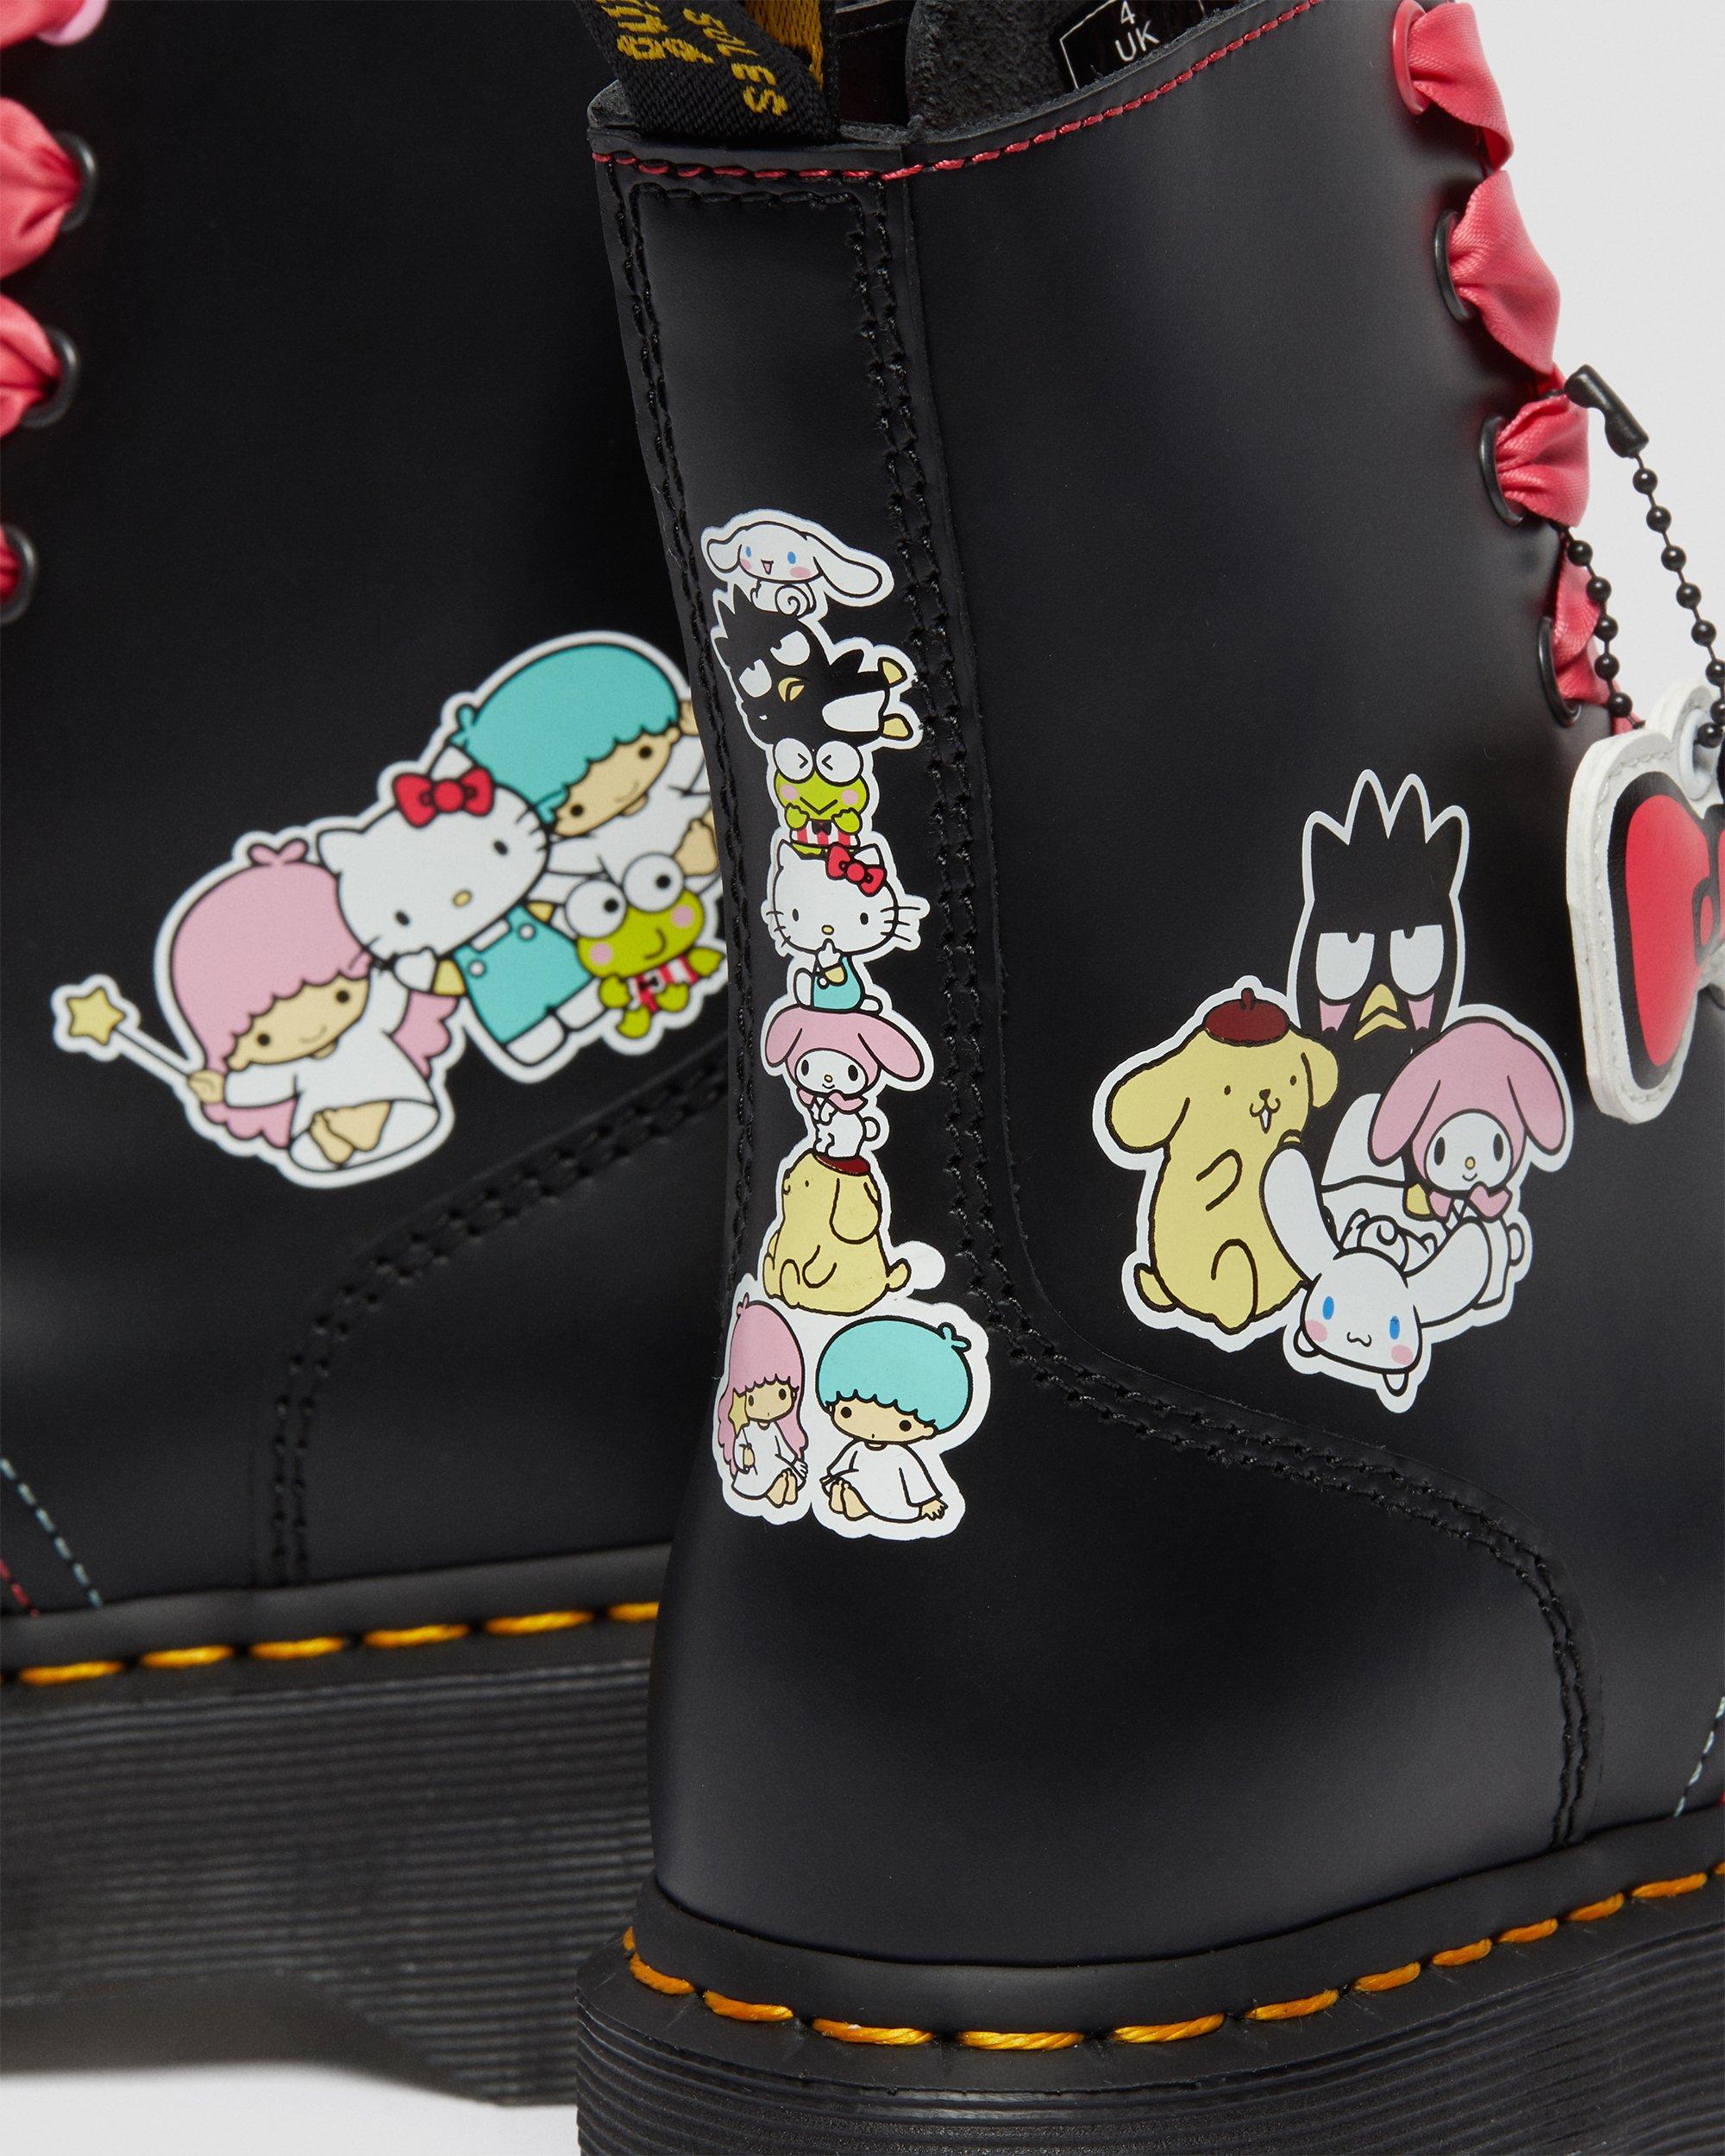 Jadon Hello Kitty & Friends Leather Platform Boots  in Black